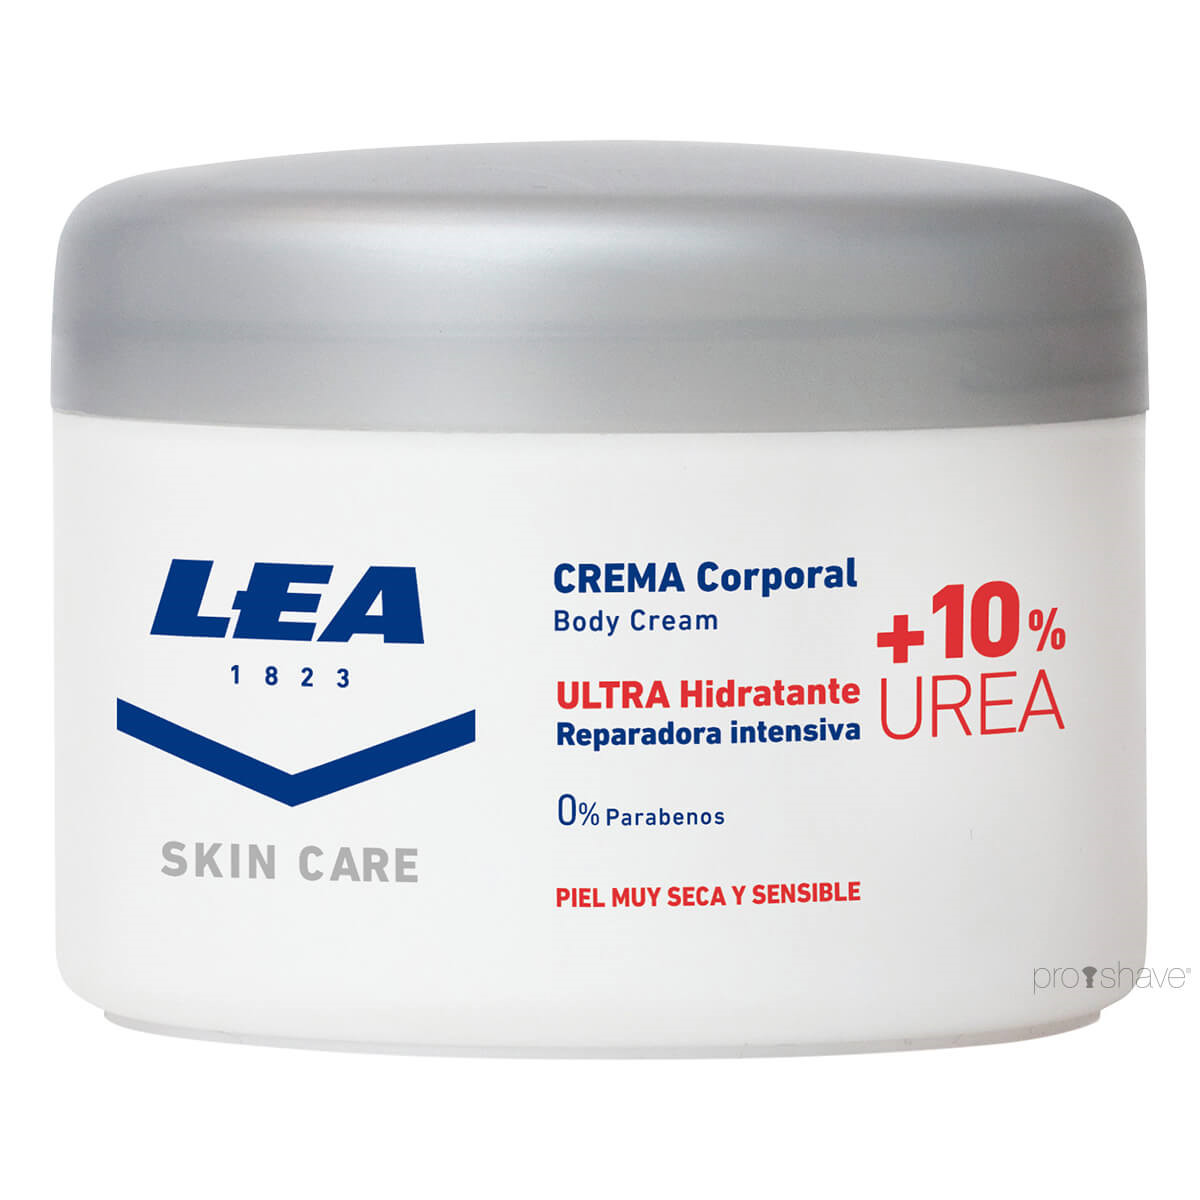 Se LEA Body Creme, 10% Urea, 200 ml. hos Proshave